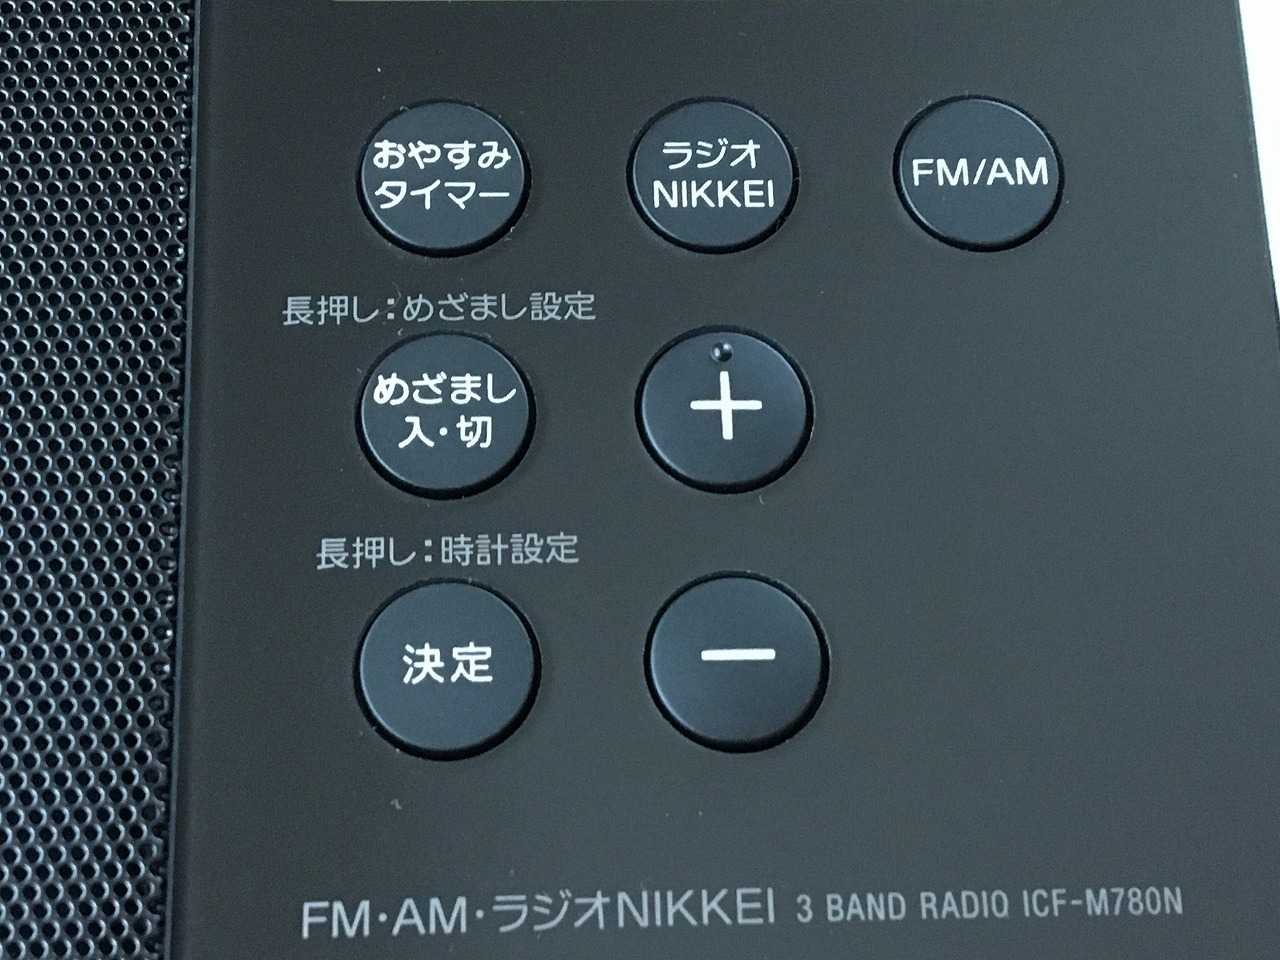 SONY ICF-M780N（FM/AM/ラジオNIKKEI PLLシンセサイザーラジオ） | ひとりごと程度のラジオ生活ブログ - 楽天ブログ